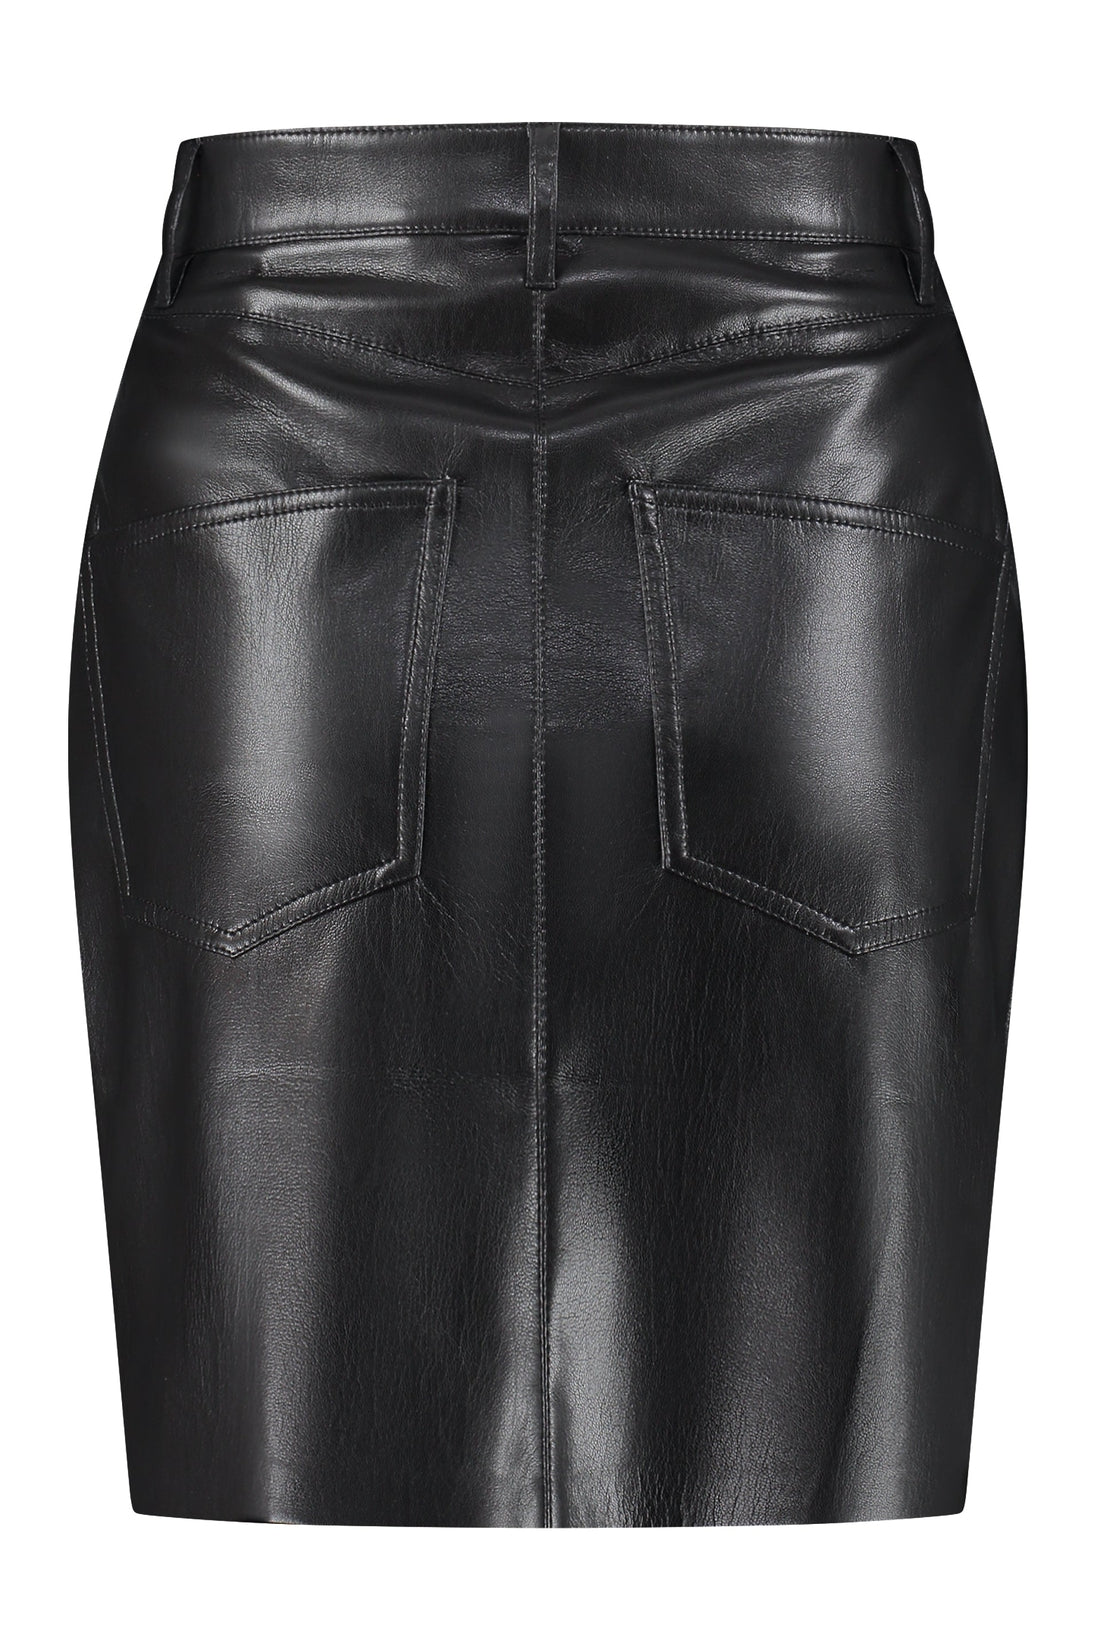 Nanushka-OUTLET-SALE-Venne faux leather skirt-ARCHIVIST